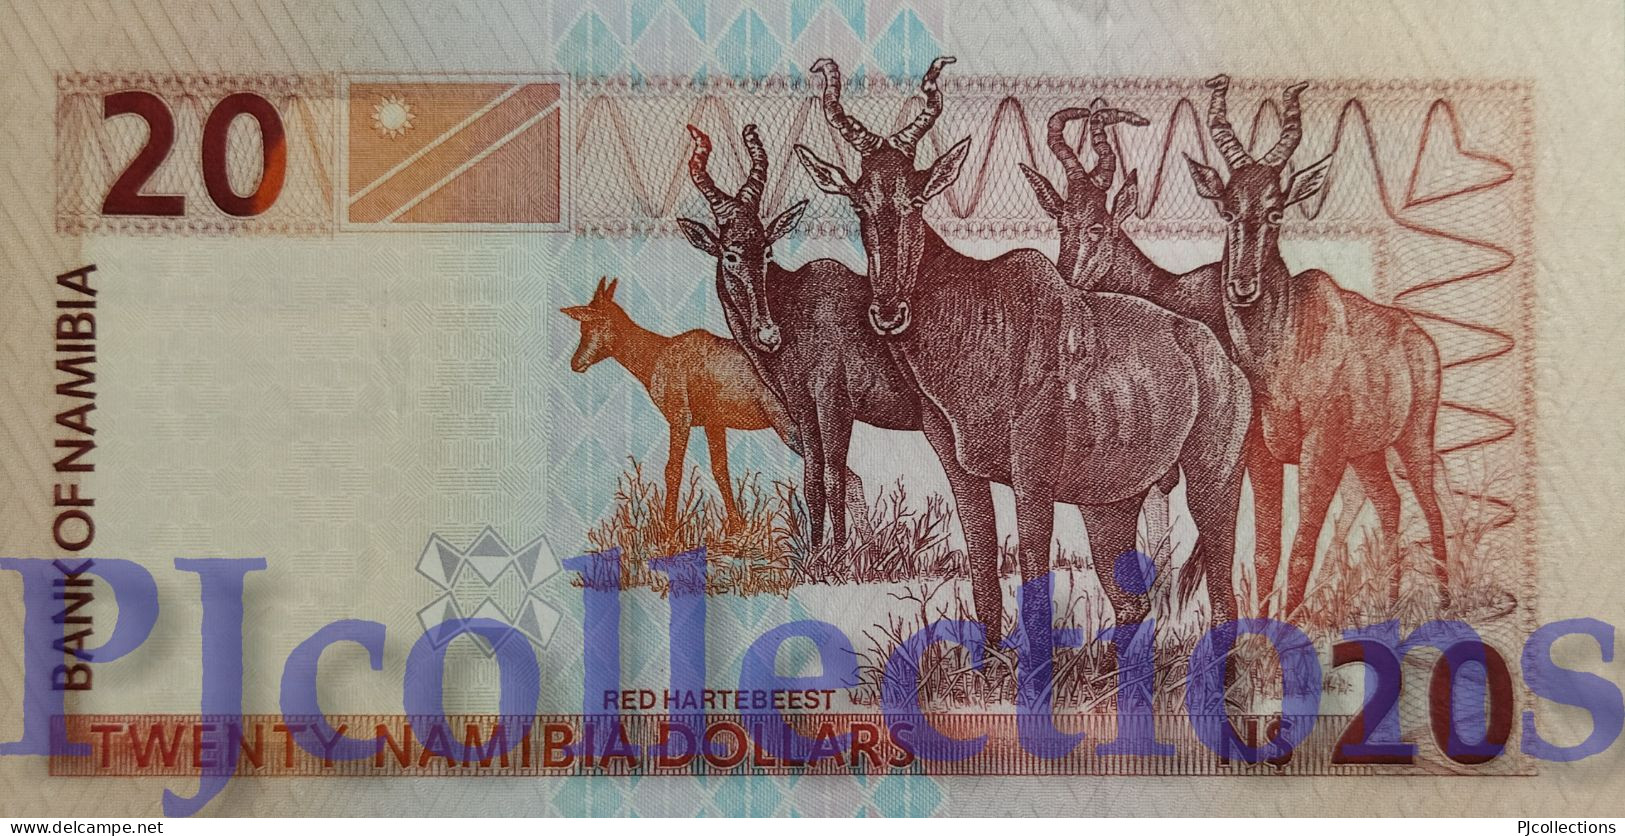 NAMIBIA 20 DOLLARS 1996 PICK 5a UNC - Namibië